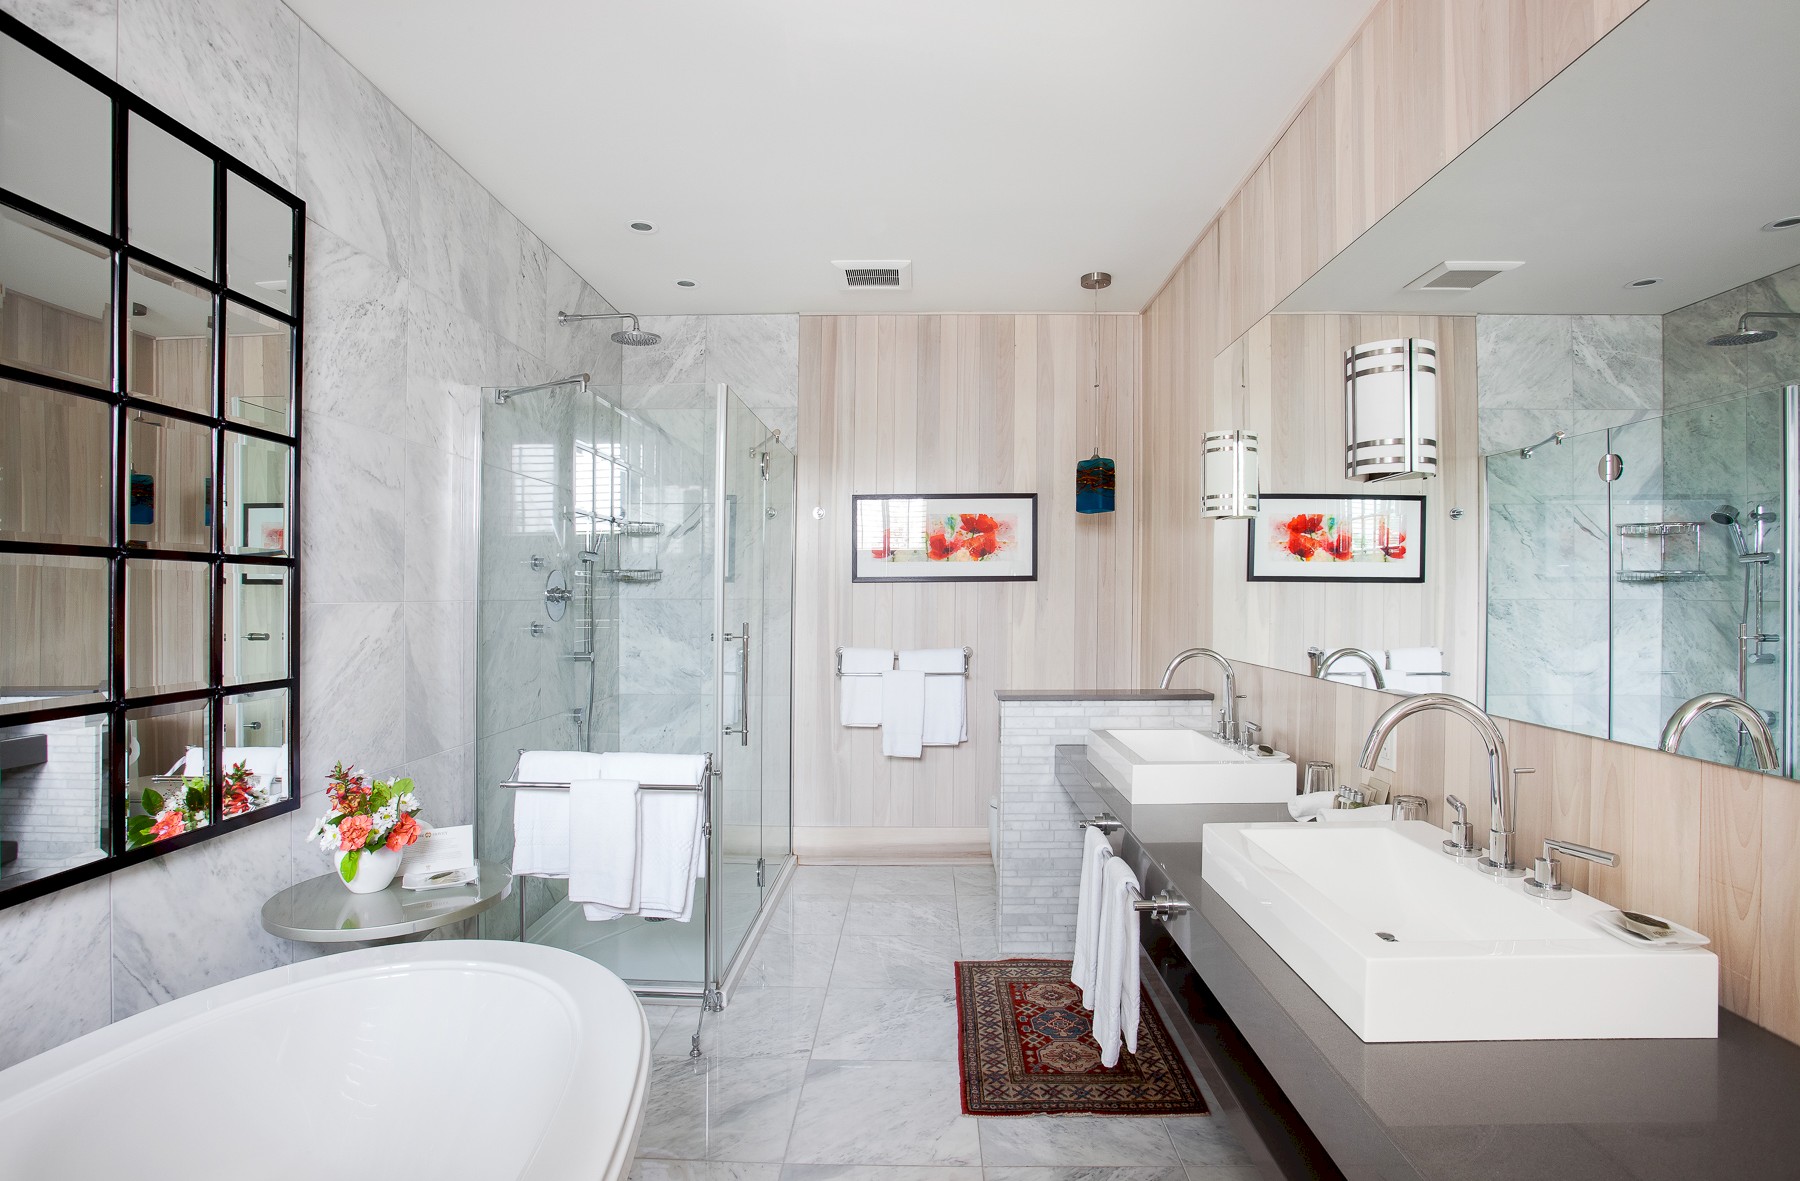 Luxurious and modern bathroom